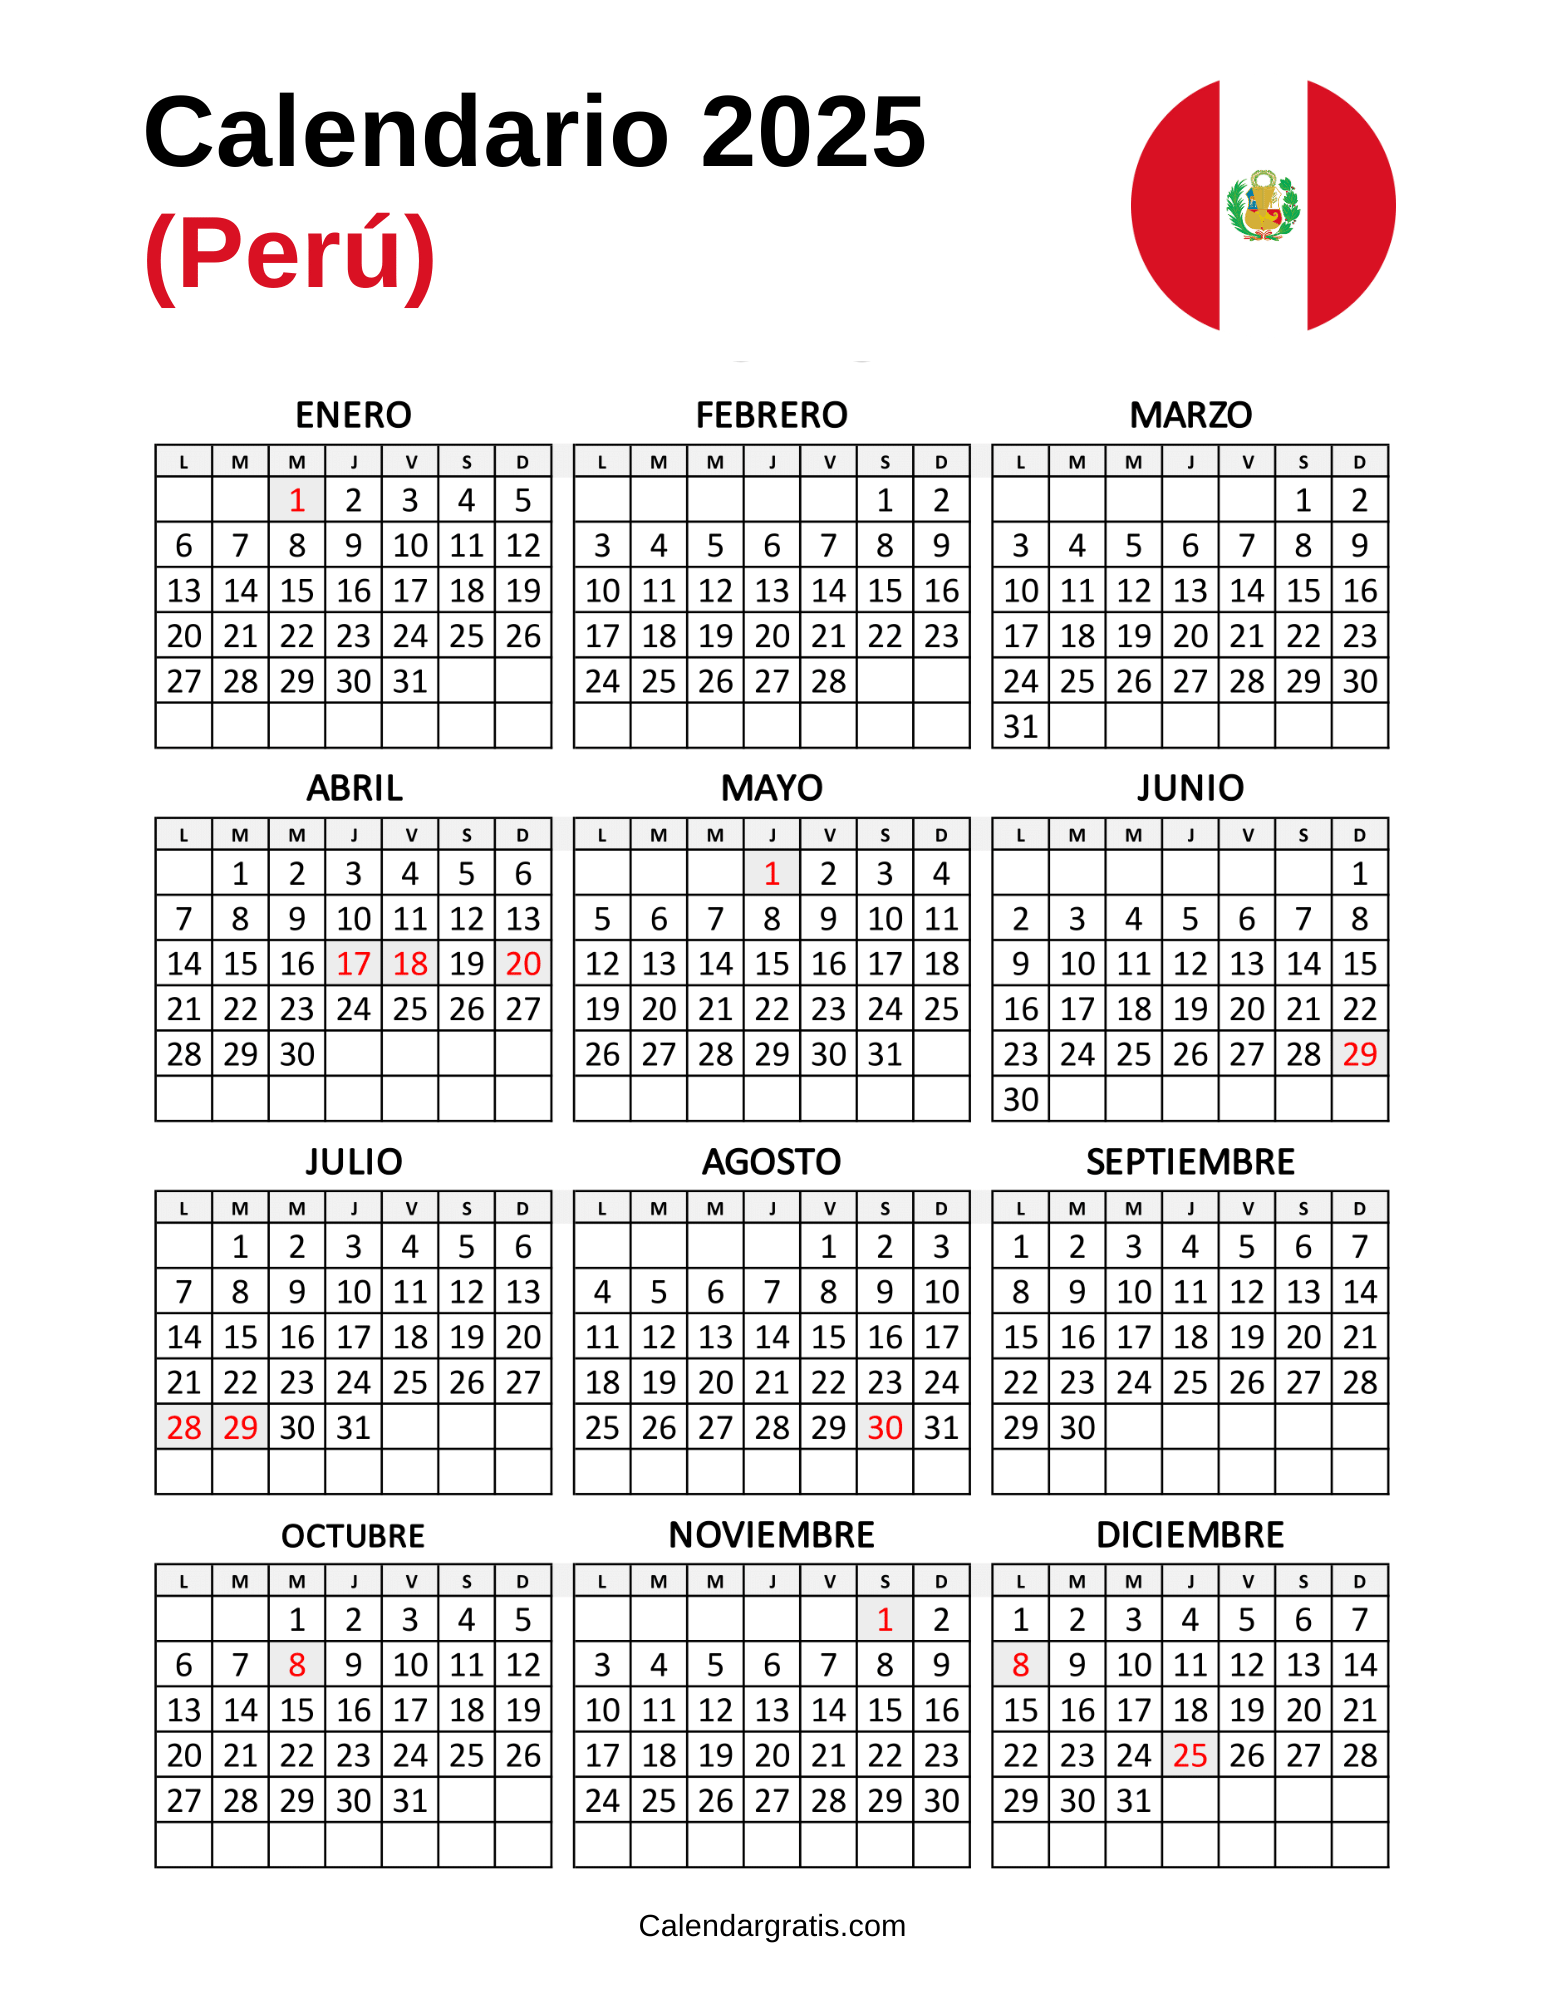 Calendario anual 2025 Perú